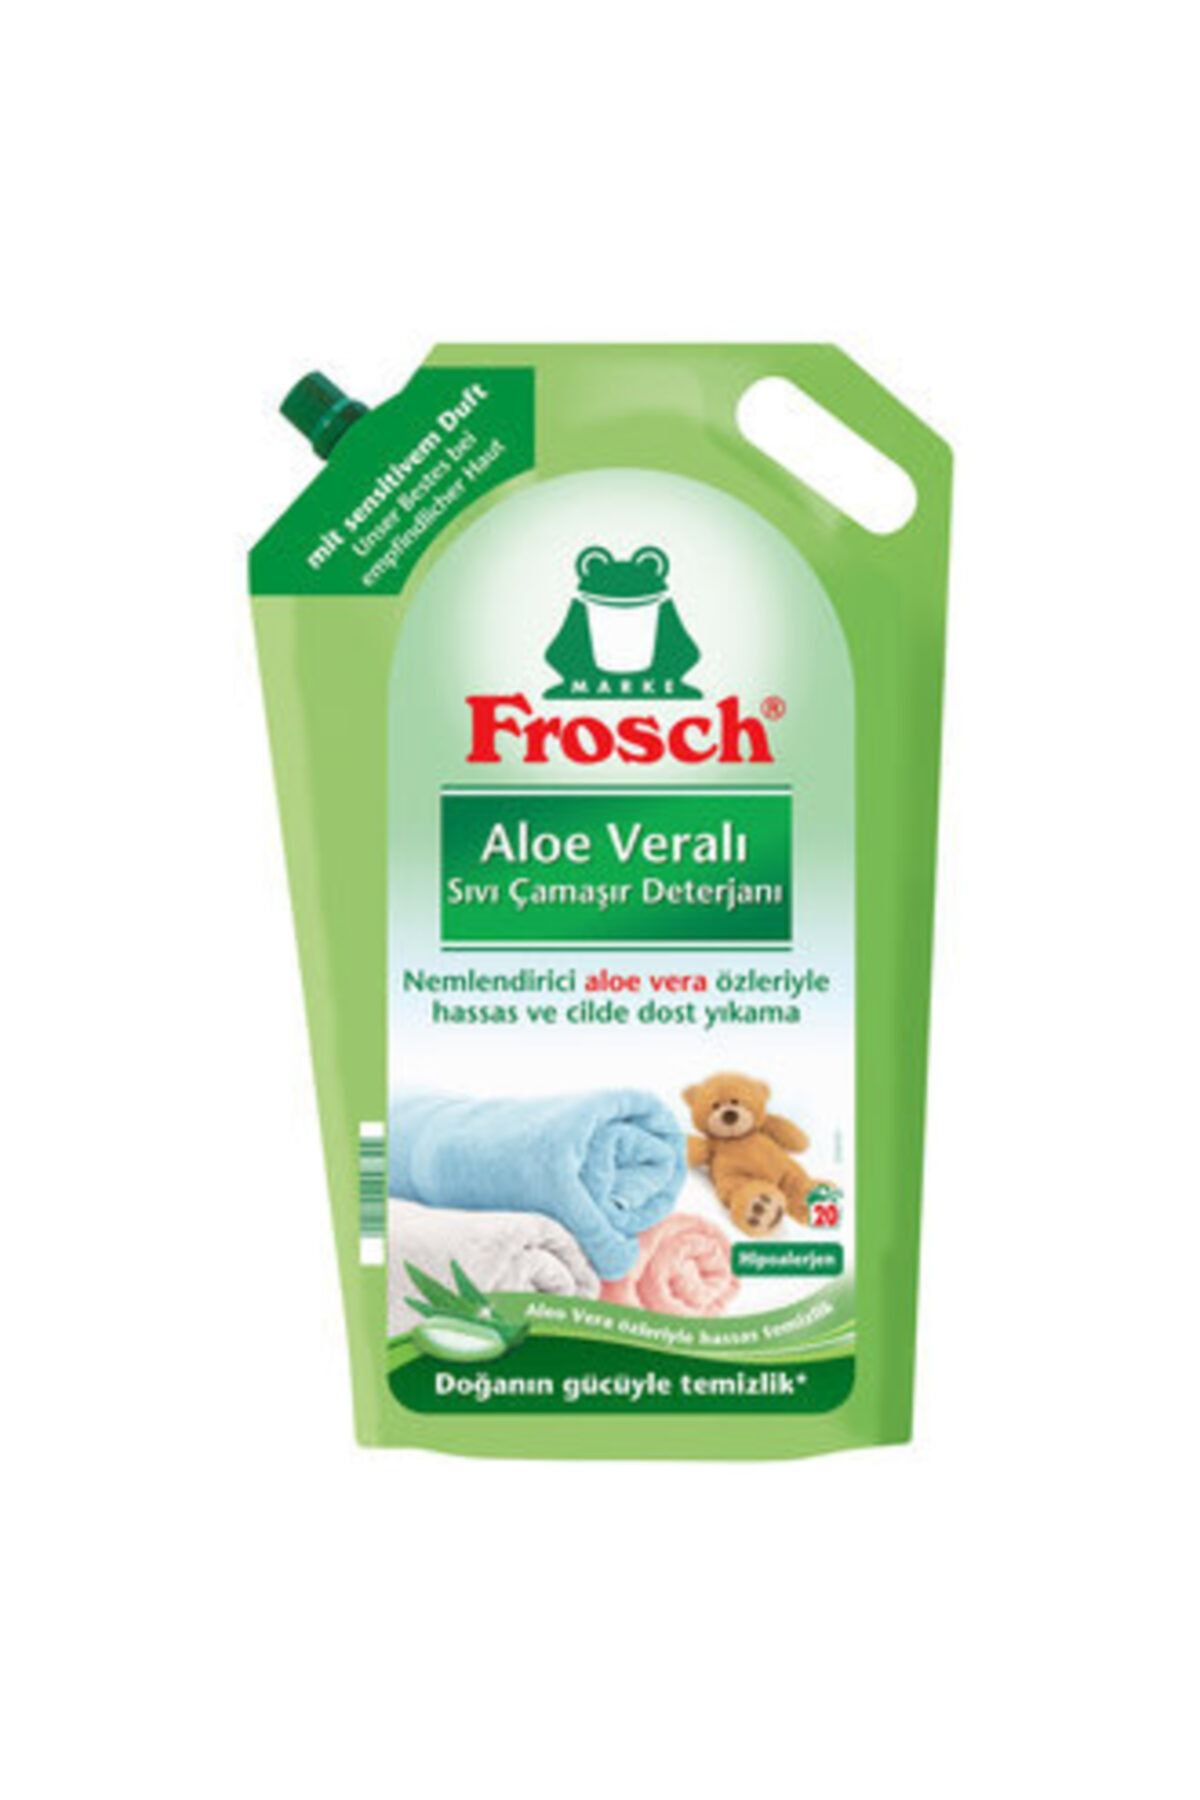 Frosch Sıvı Çamaşır Deterjanı Aloe Veralı 1.8 L